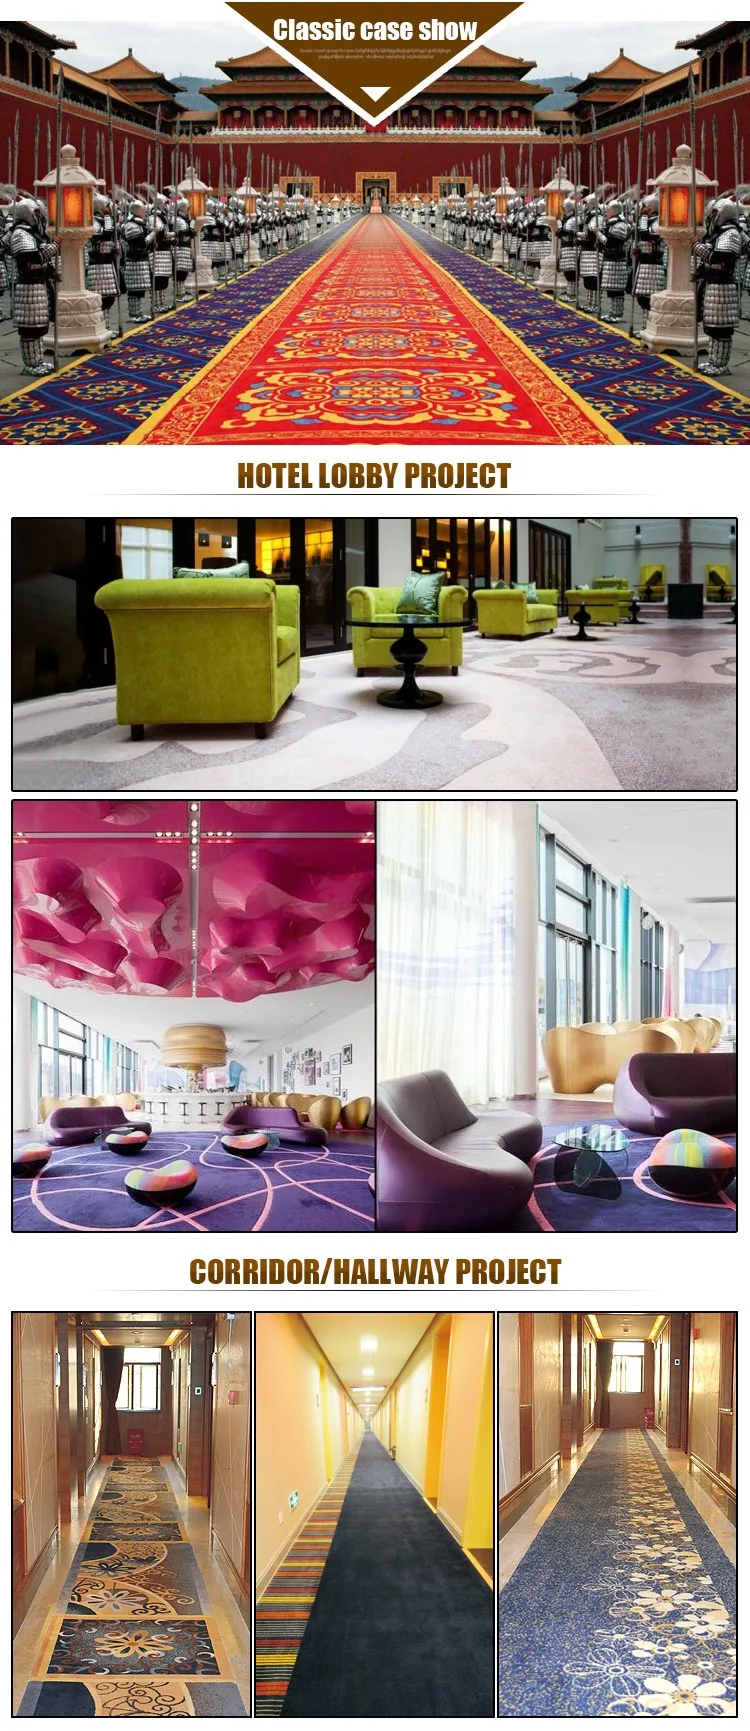 New Carpet Design Axminster Wool Carpet Luxury Hote Banquet Hall Carpet Rolls In Guangzhou